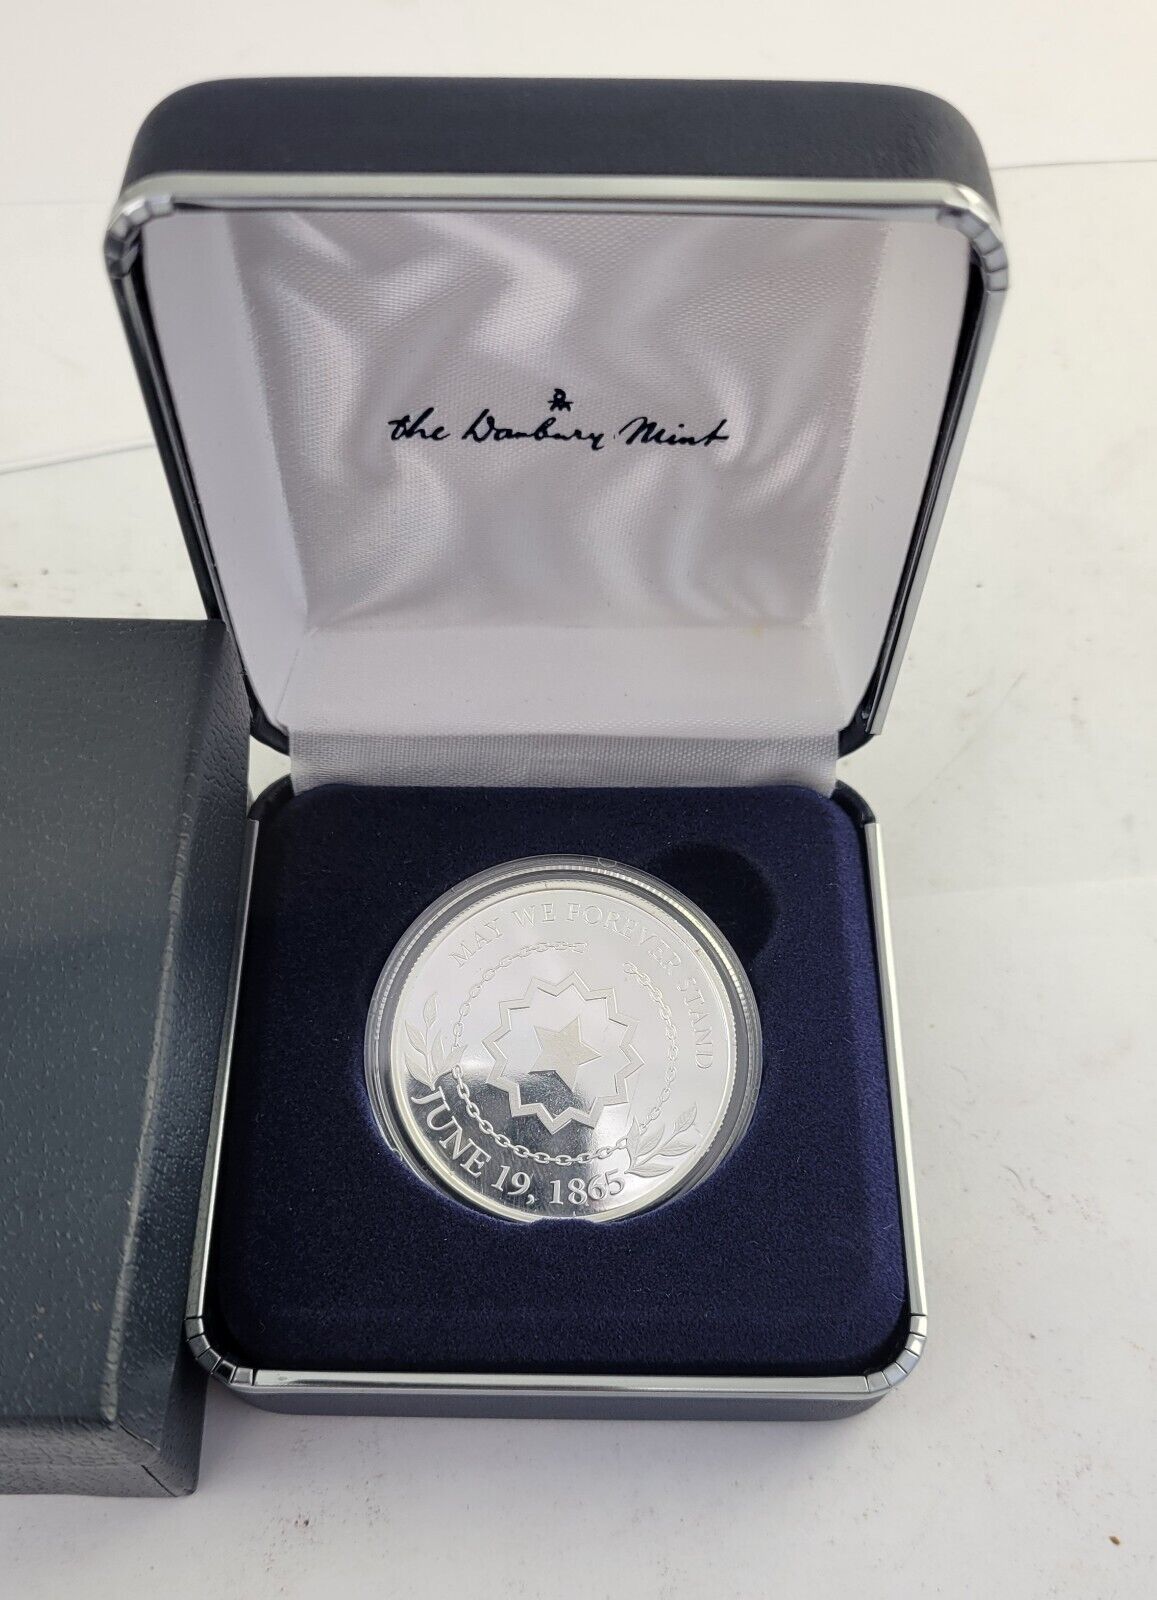 Juneteeth 1865 Danbury Mint 1 oz Silver Bullion Coin .999 Fine Boxed